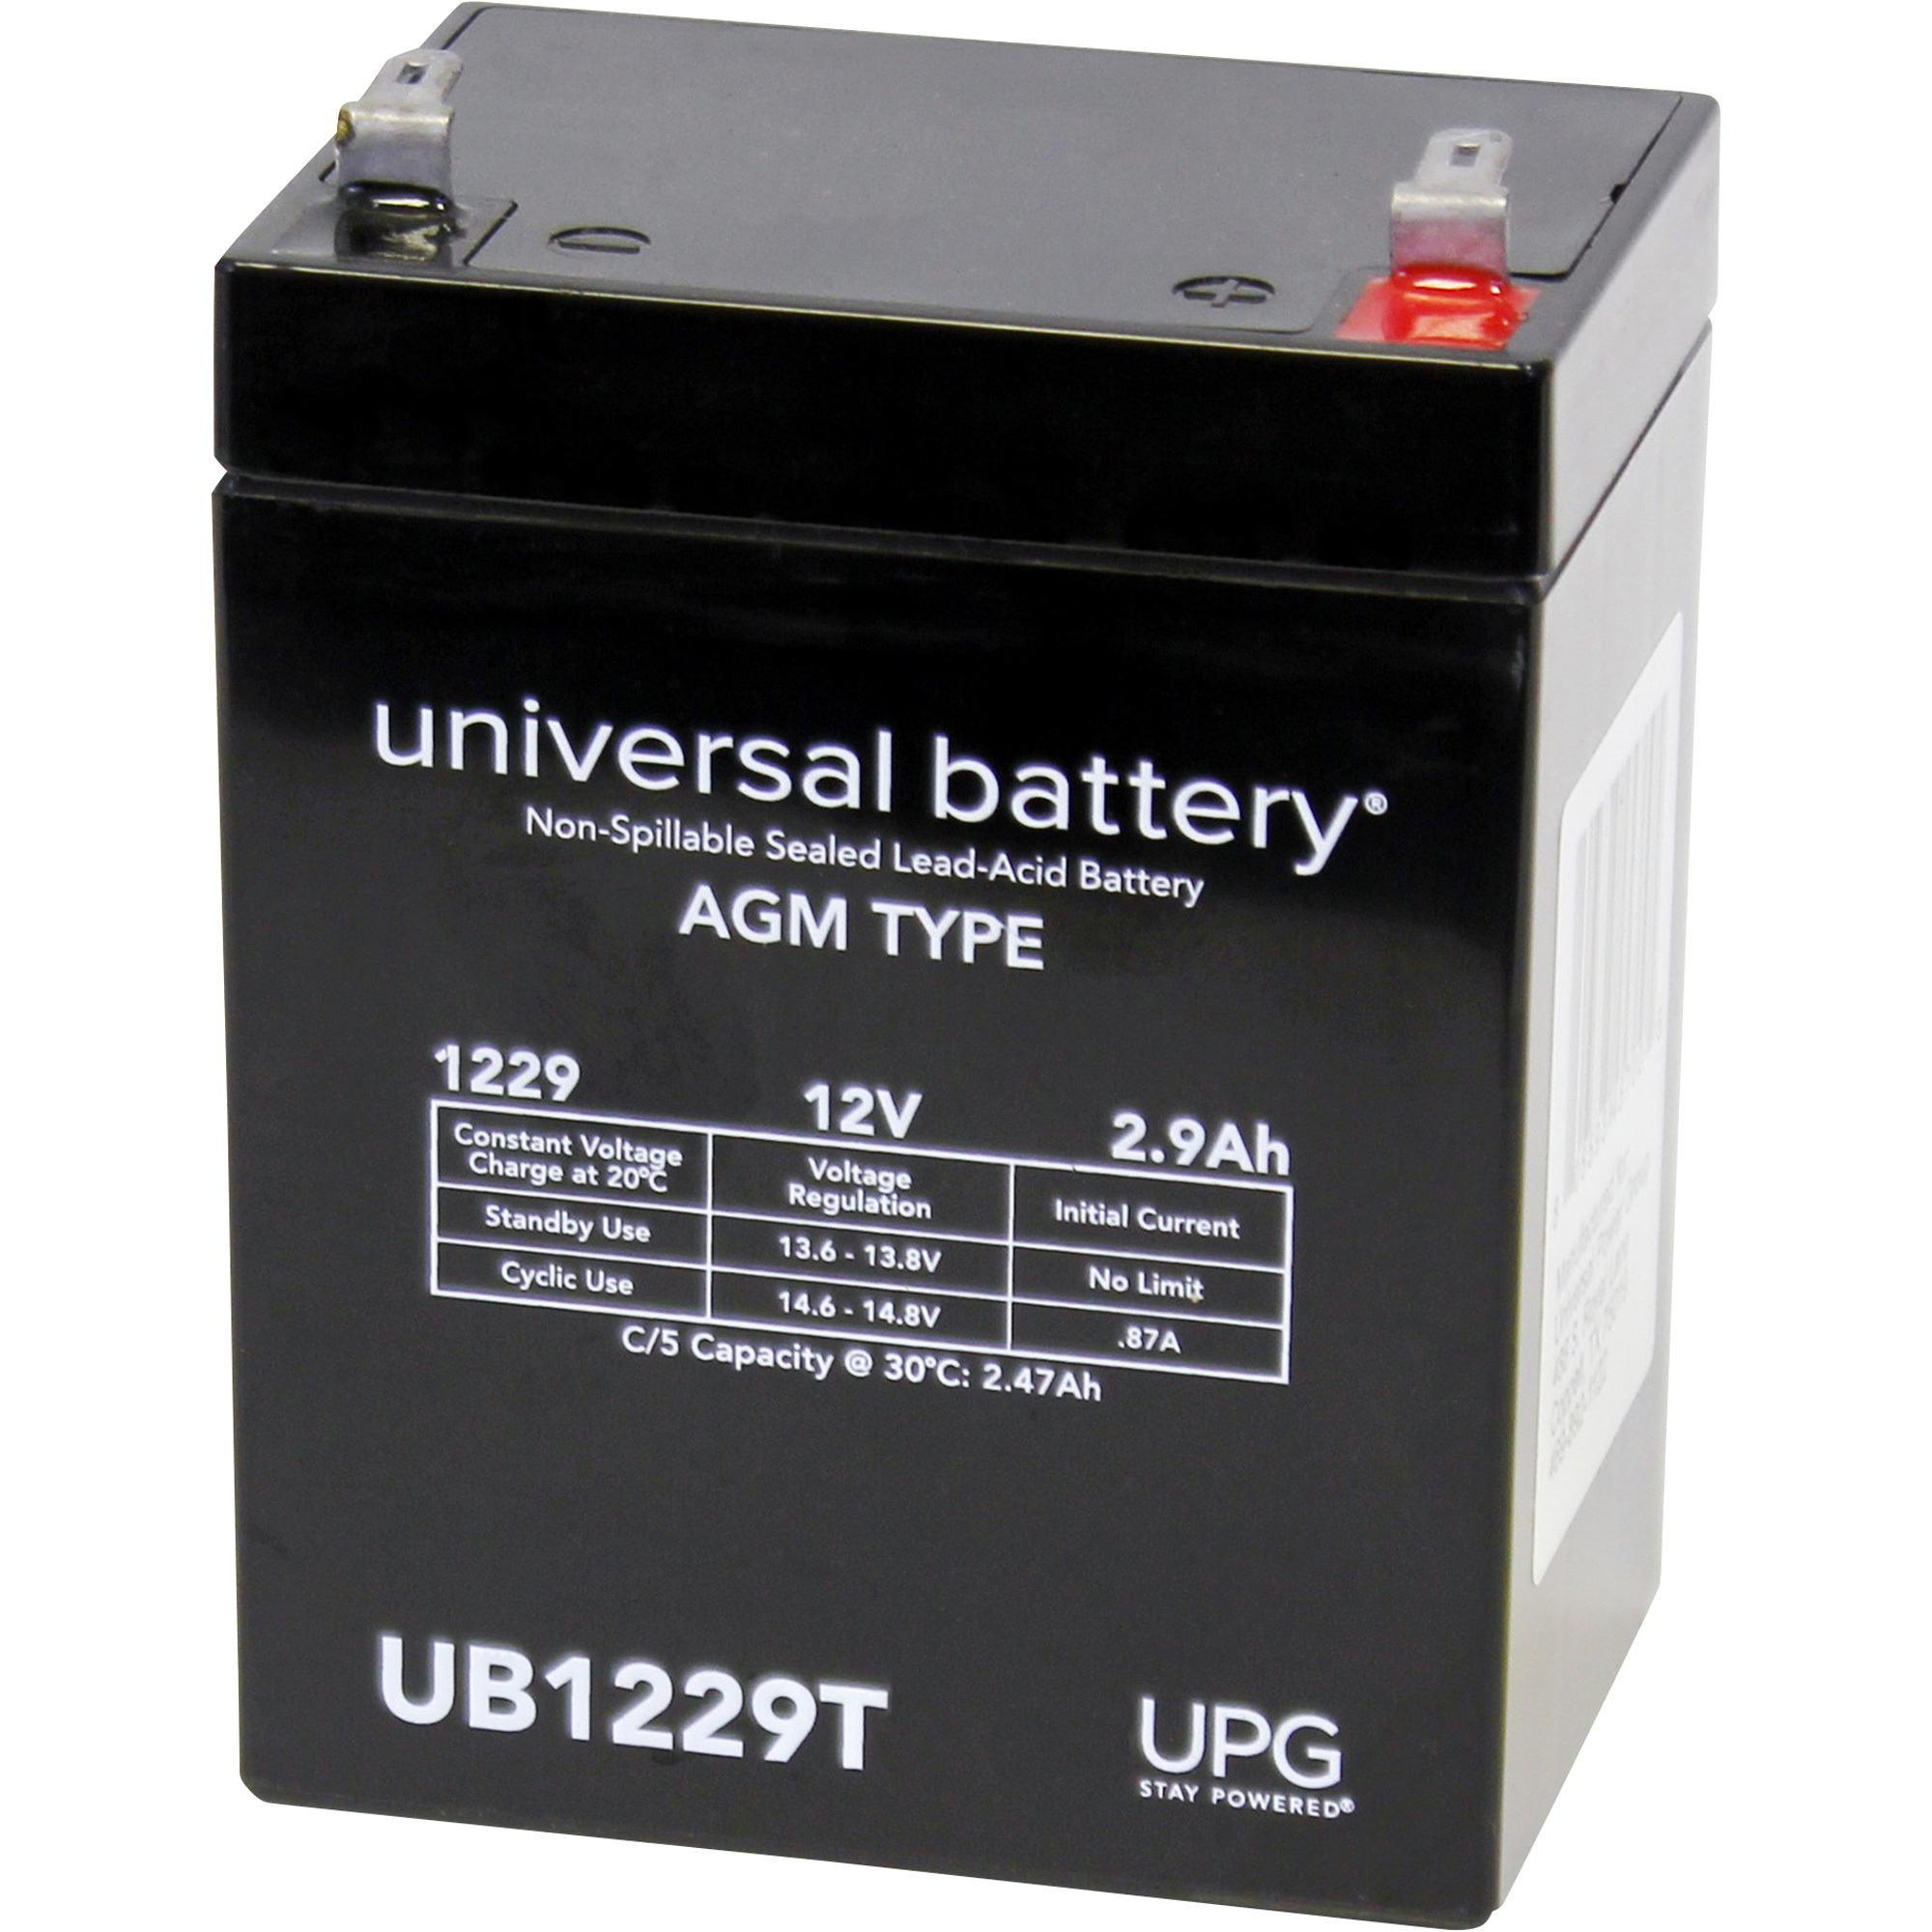 UPG Universal Sealed Lead-Acid Battery, AGM-type, 12V, 2.9 Amps, Model UB1229T